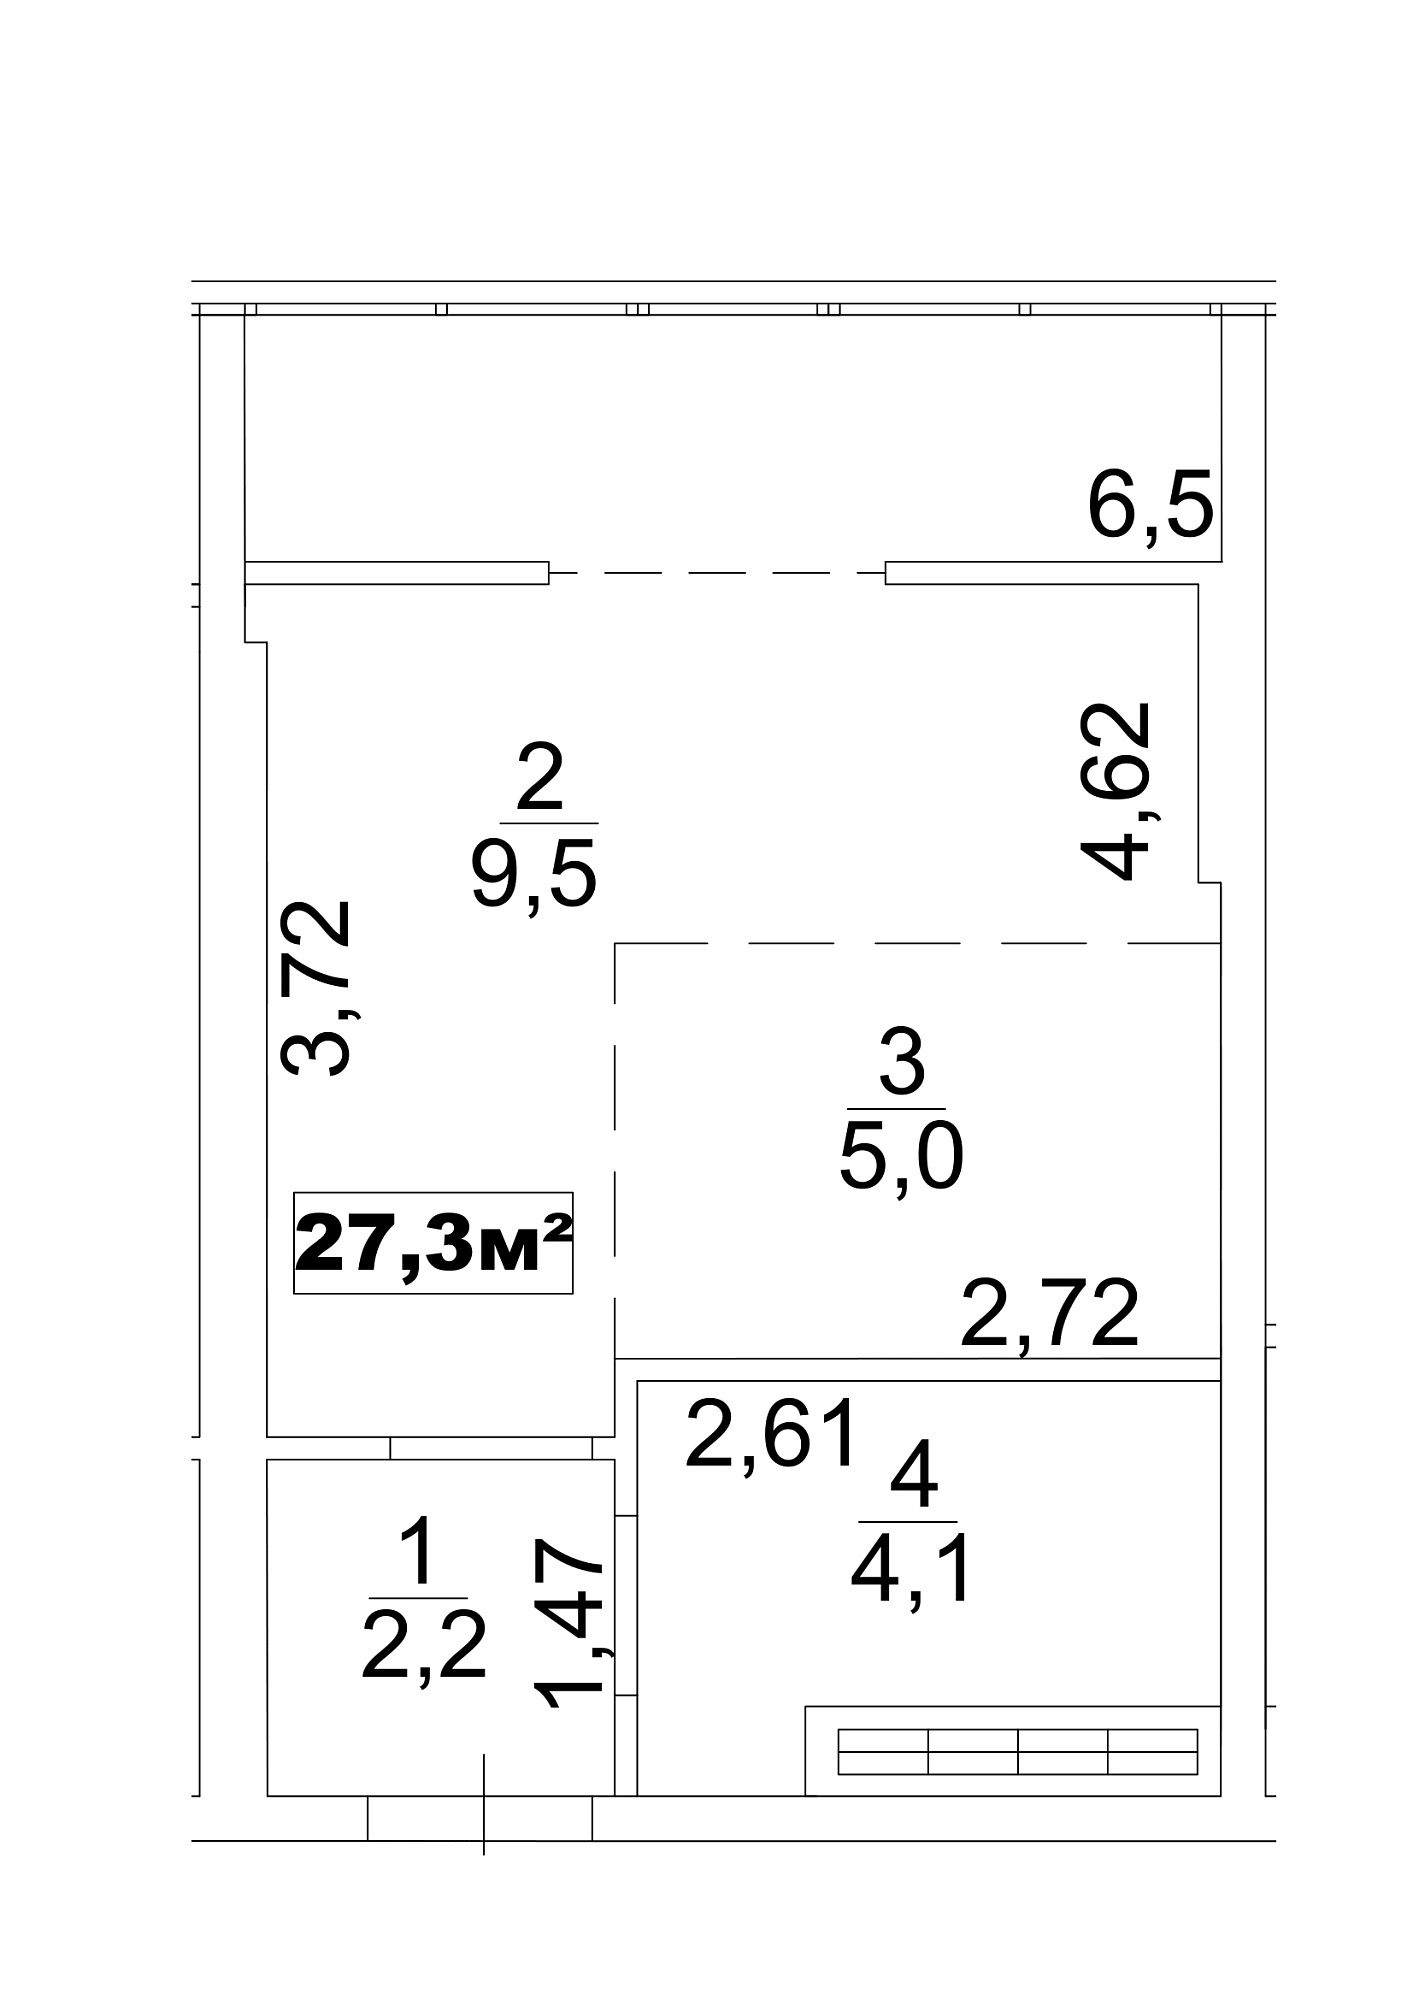 Planning Smart flats area 27.3m2, AB-13-10/0081в.